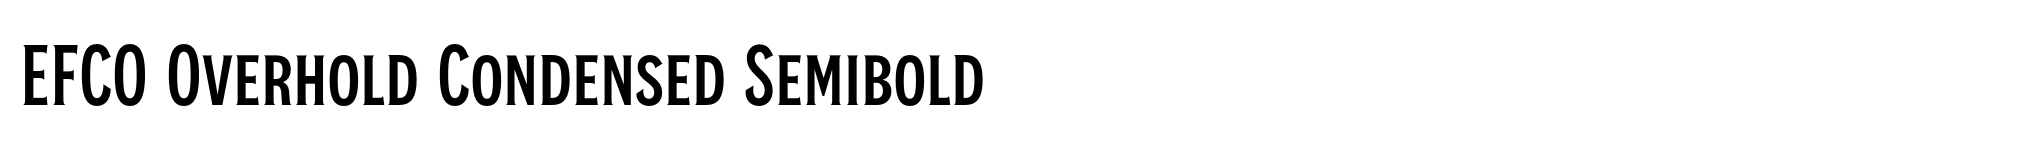 EFCO Overhold Condensed Semibold image